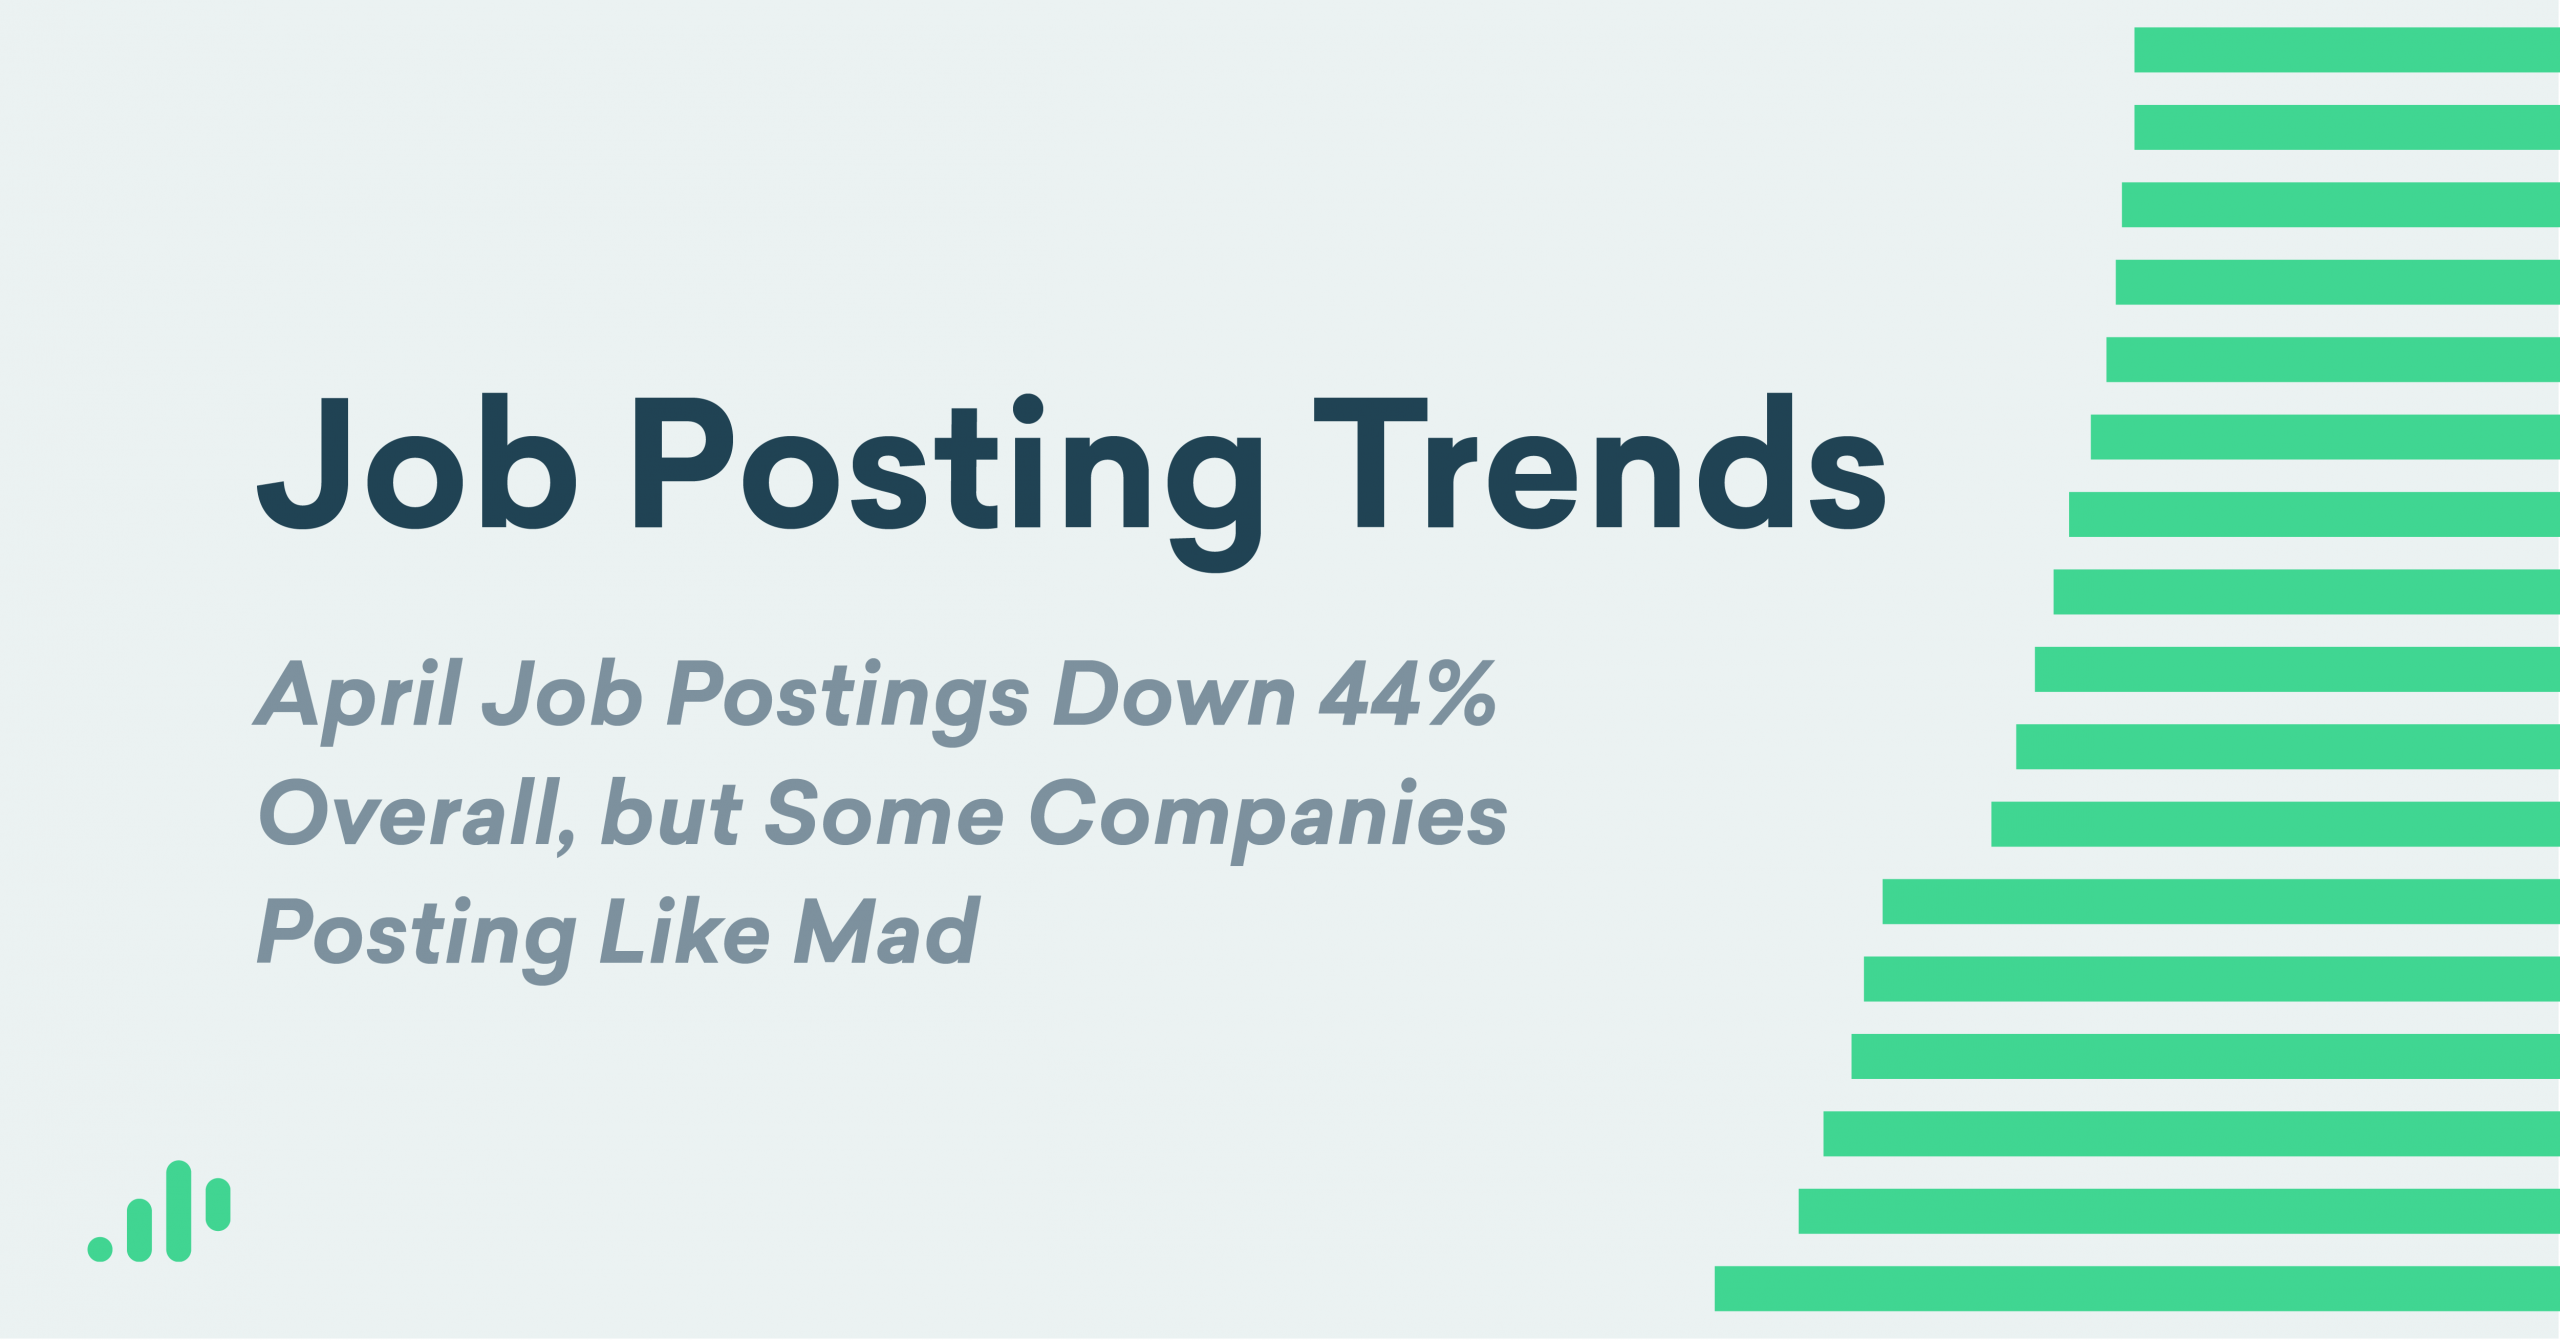 Job Posting Trends: April Job Postings Down 44% Overall, but Some Companies Posting Like Mad